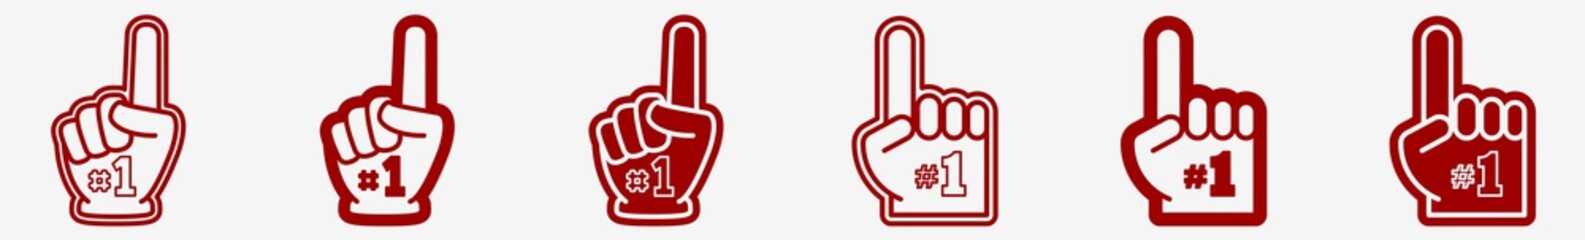 Fototapeta Number 1 Fan Glove Icon Set Red | Number One Hand Glove Vector Illustration Logo | Number 1 Index Finger Forefinger Icons Isolated Collection obraz